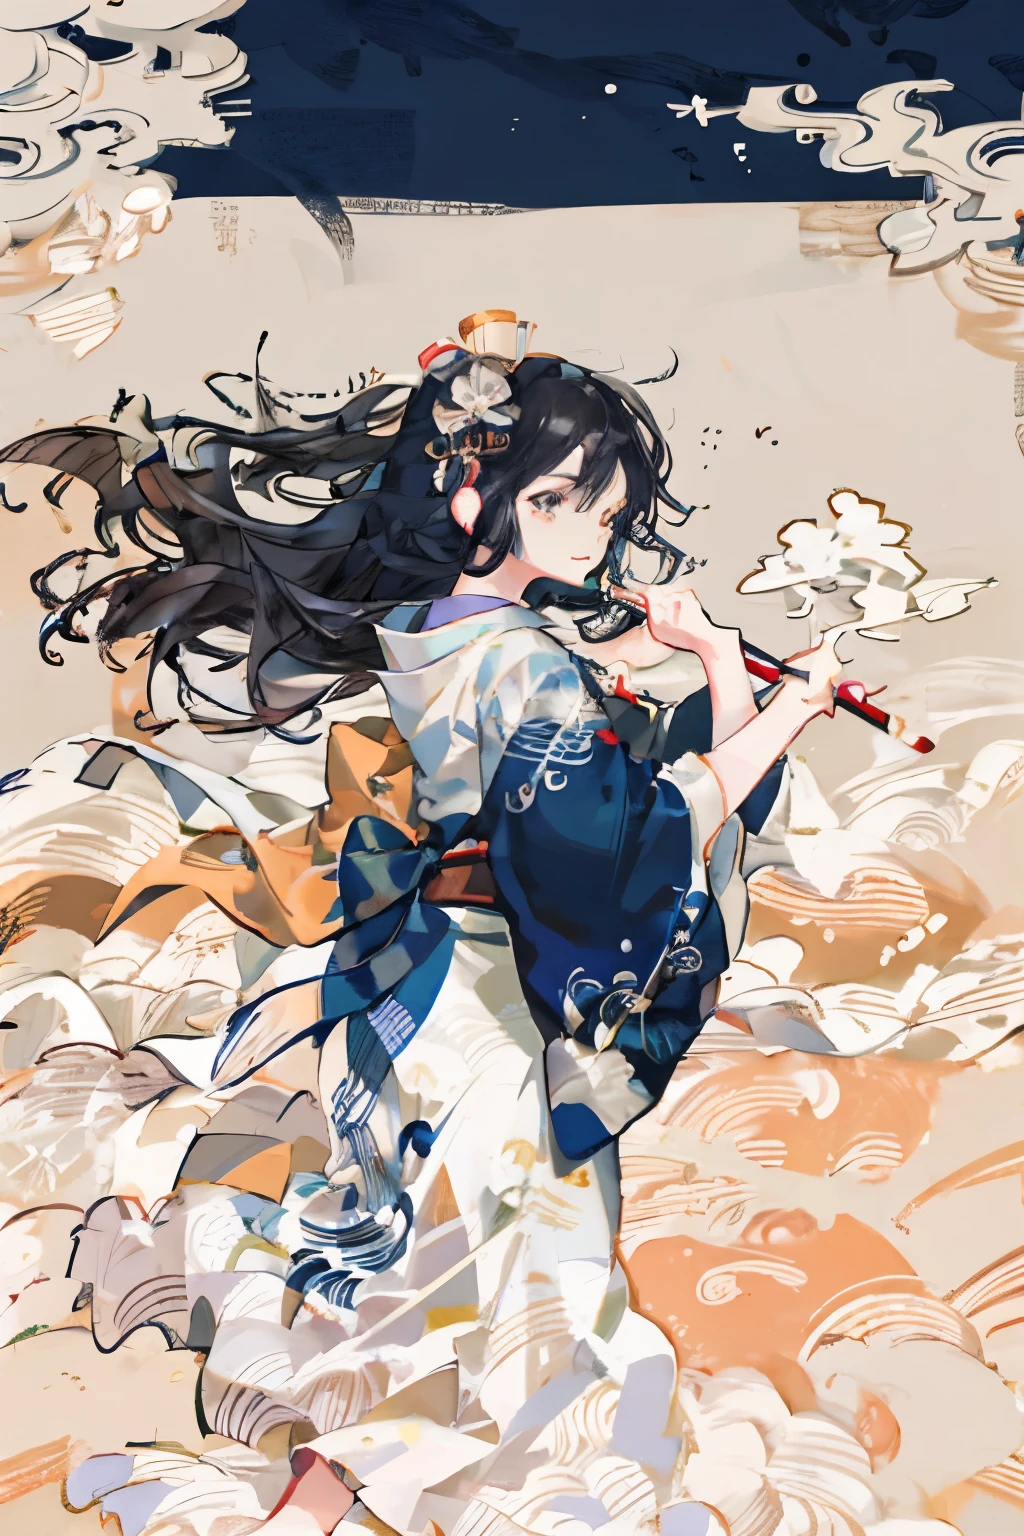 Japanese Calligraphy performance, kendo suit, tasuki, huge brush, ink, splashes, bold waves as if dancing with a big brush, Hokusai Katsushika, delicate and precise, anime style, girl